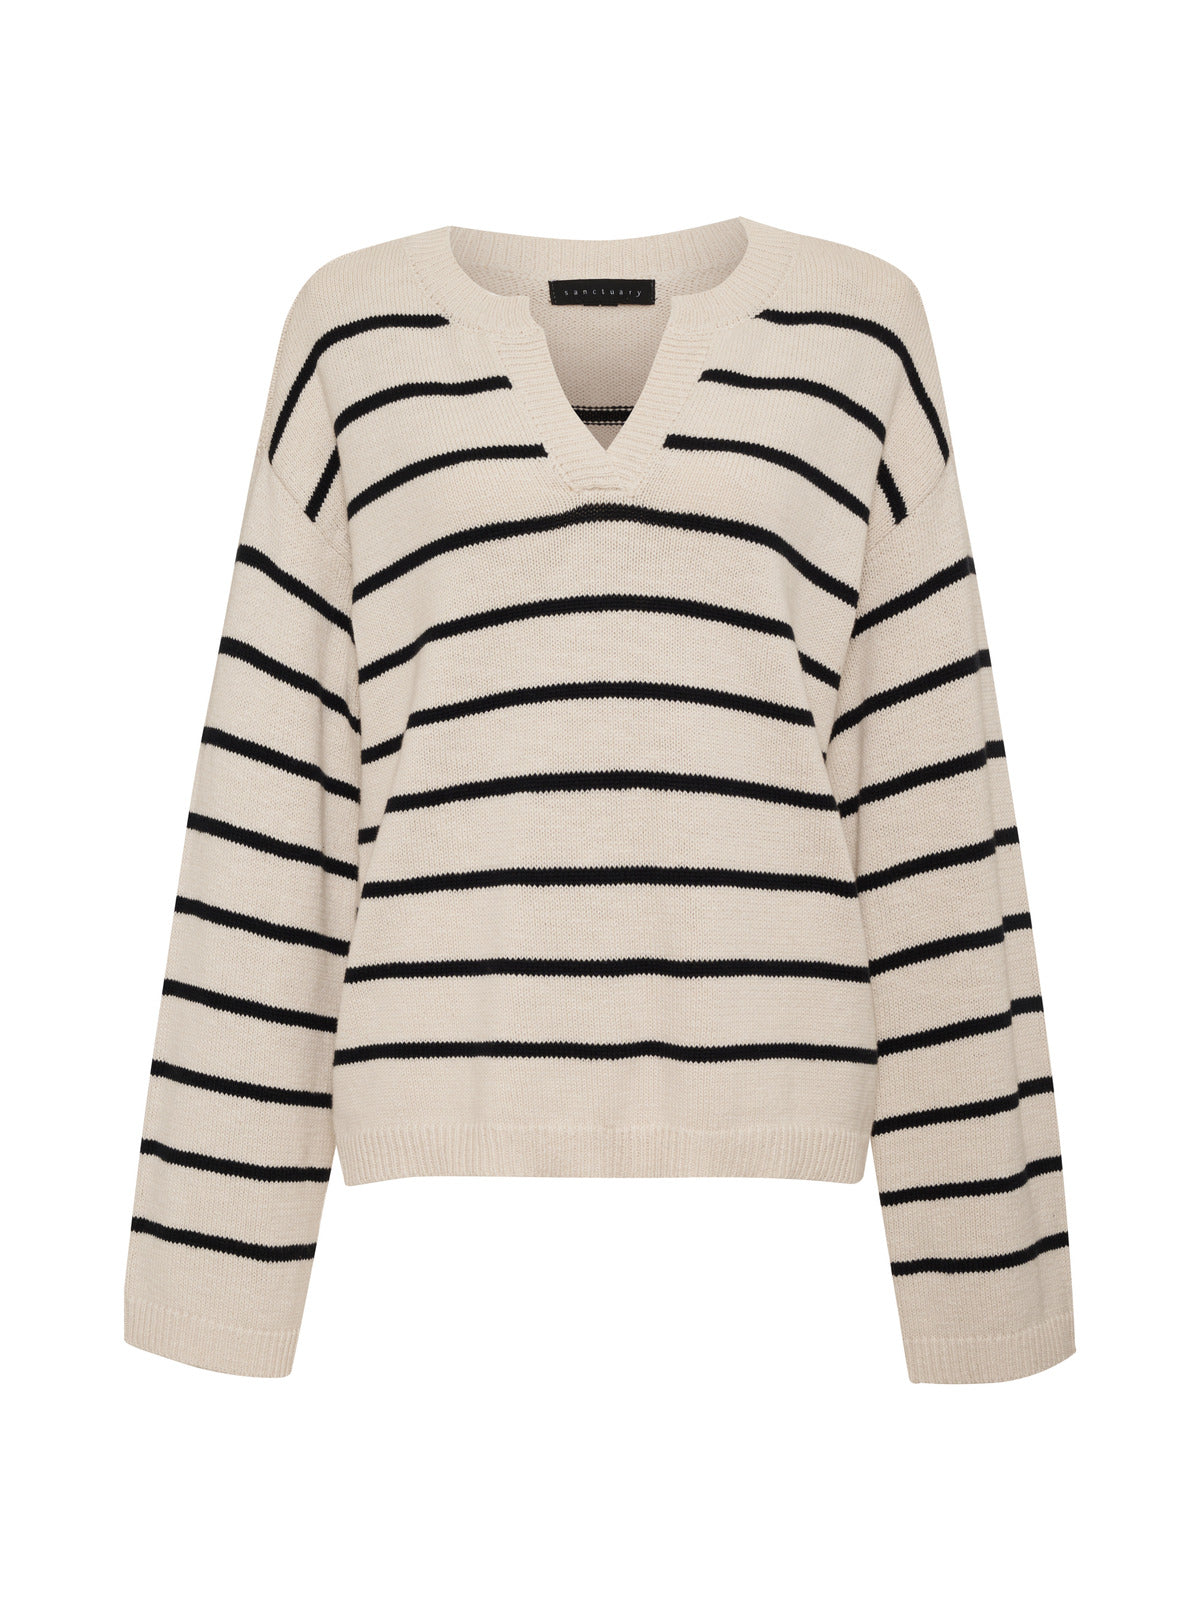 Chill Vibes Sweater Chalk Black Stripe Inclusive Collection